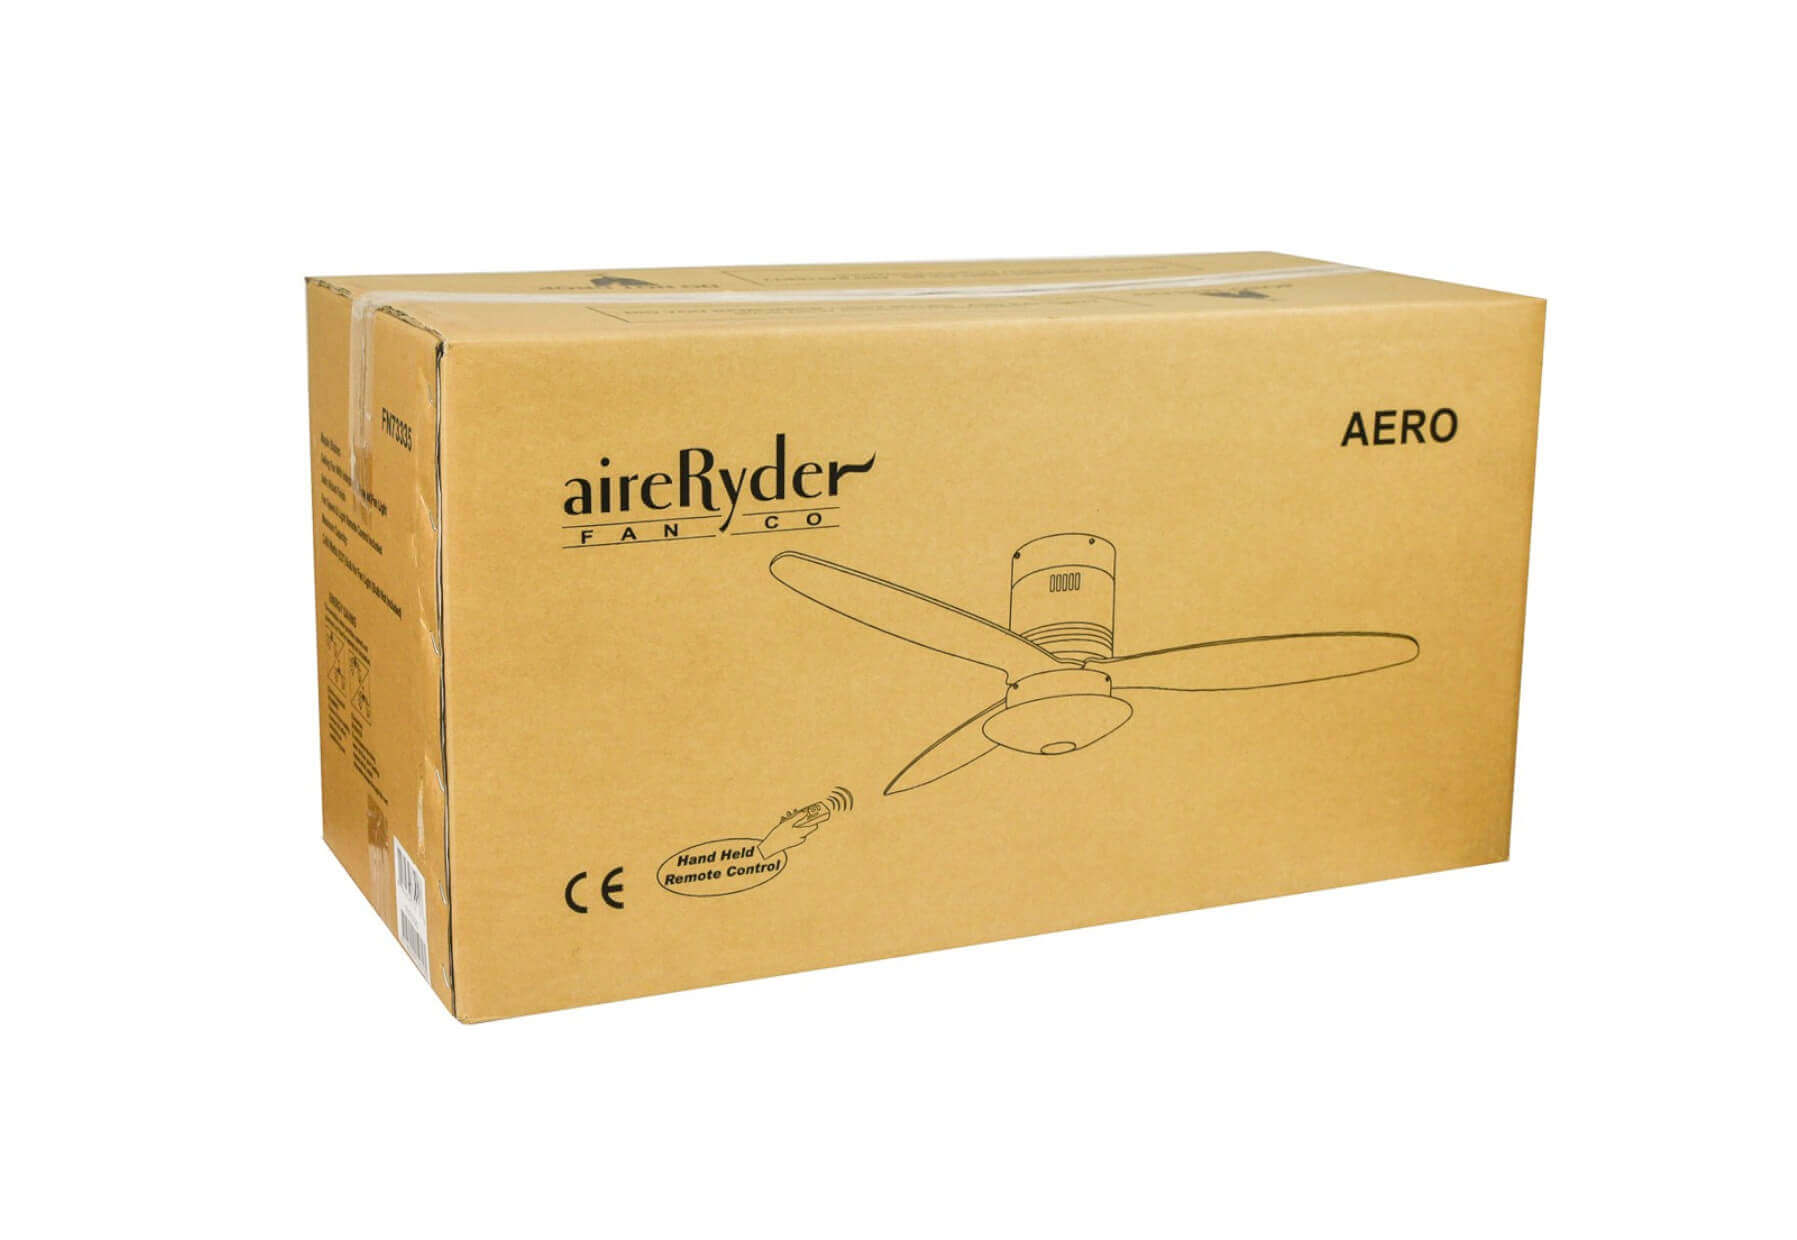 Ahorn Deckenventilator Watt) Aero (45 AIRERYDER